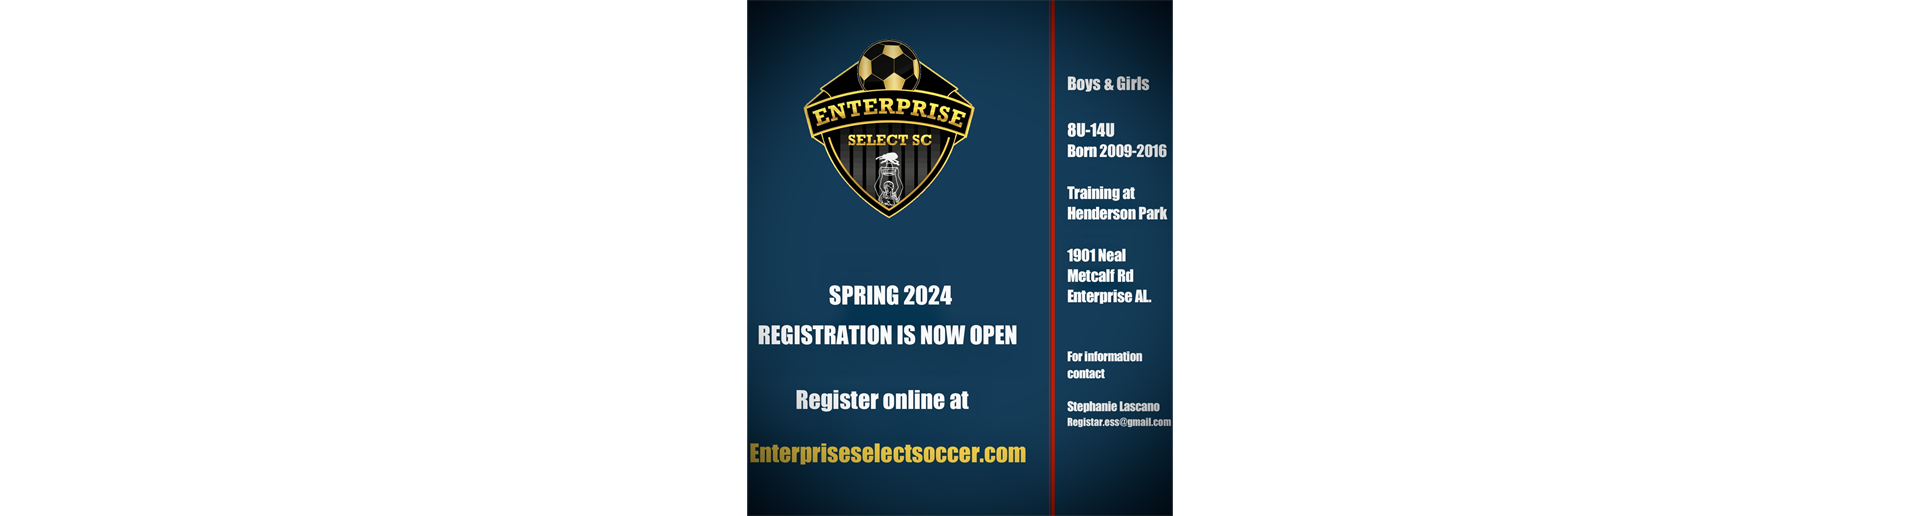 Spring 2024 Registration is open 